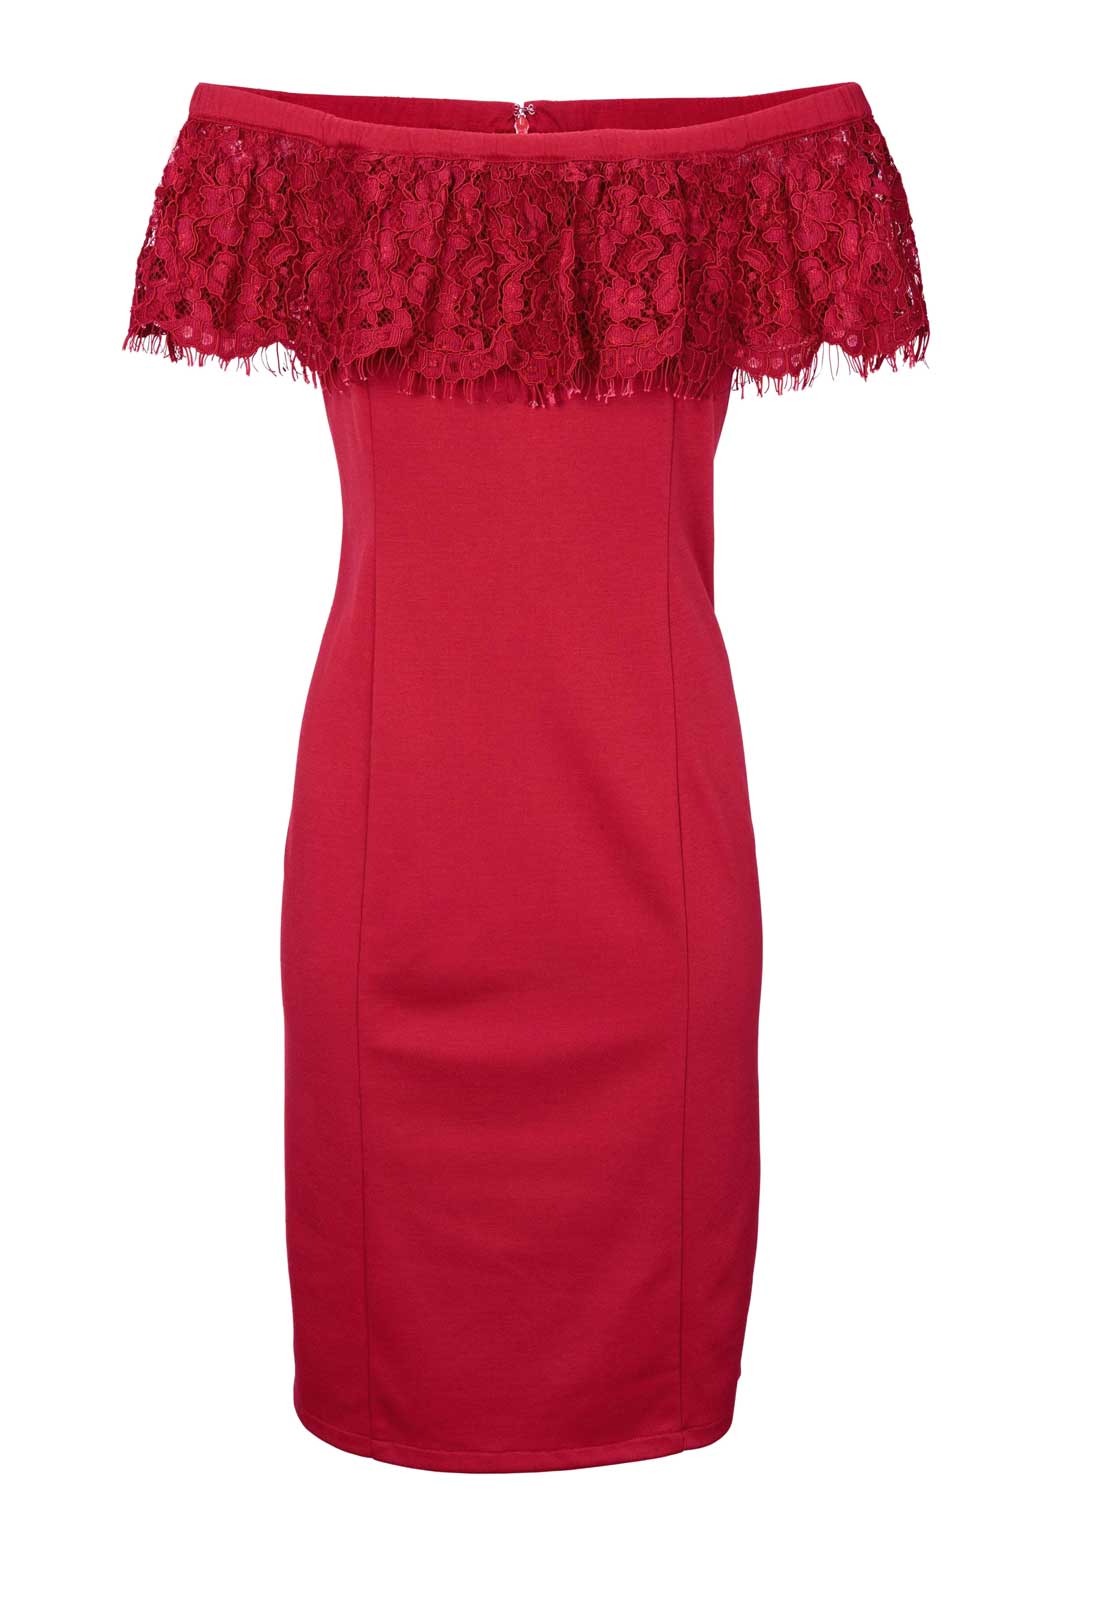 Ashley Brooke Damen Designer-Carmenkleid mit Spitze, rot